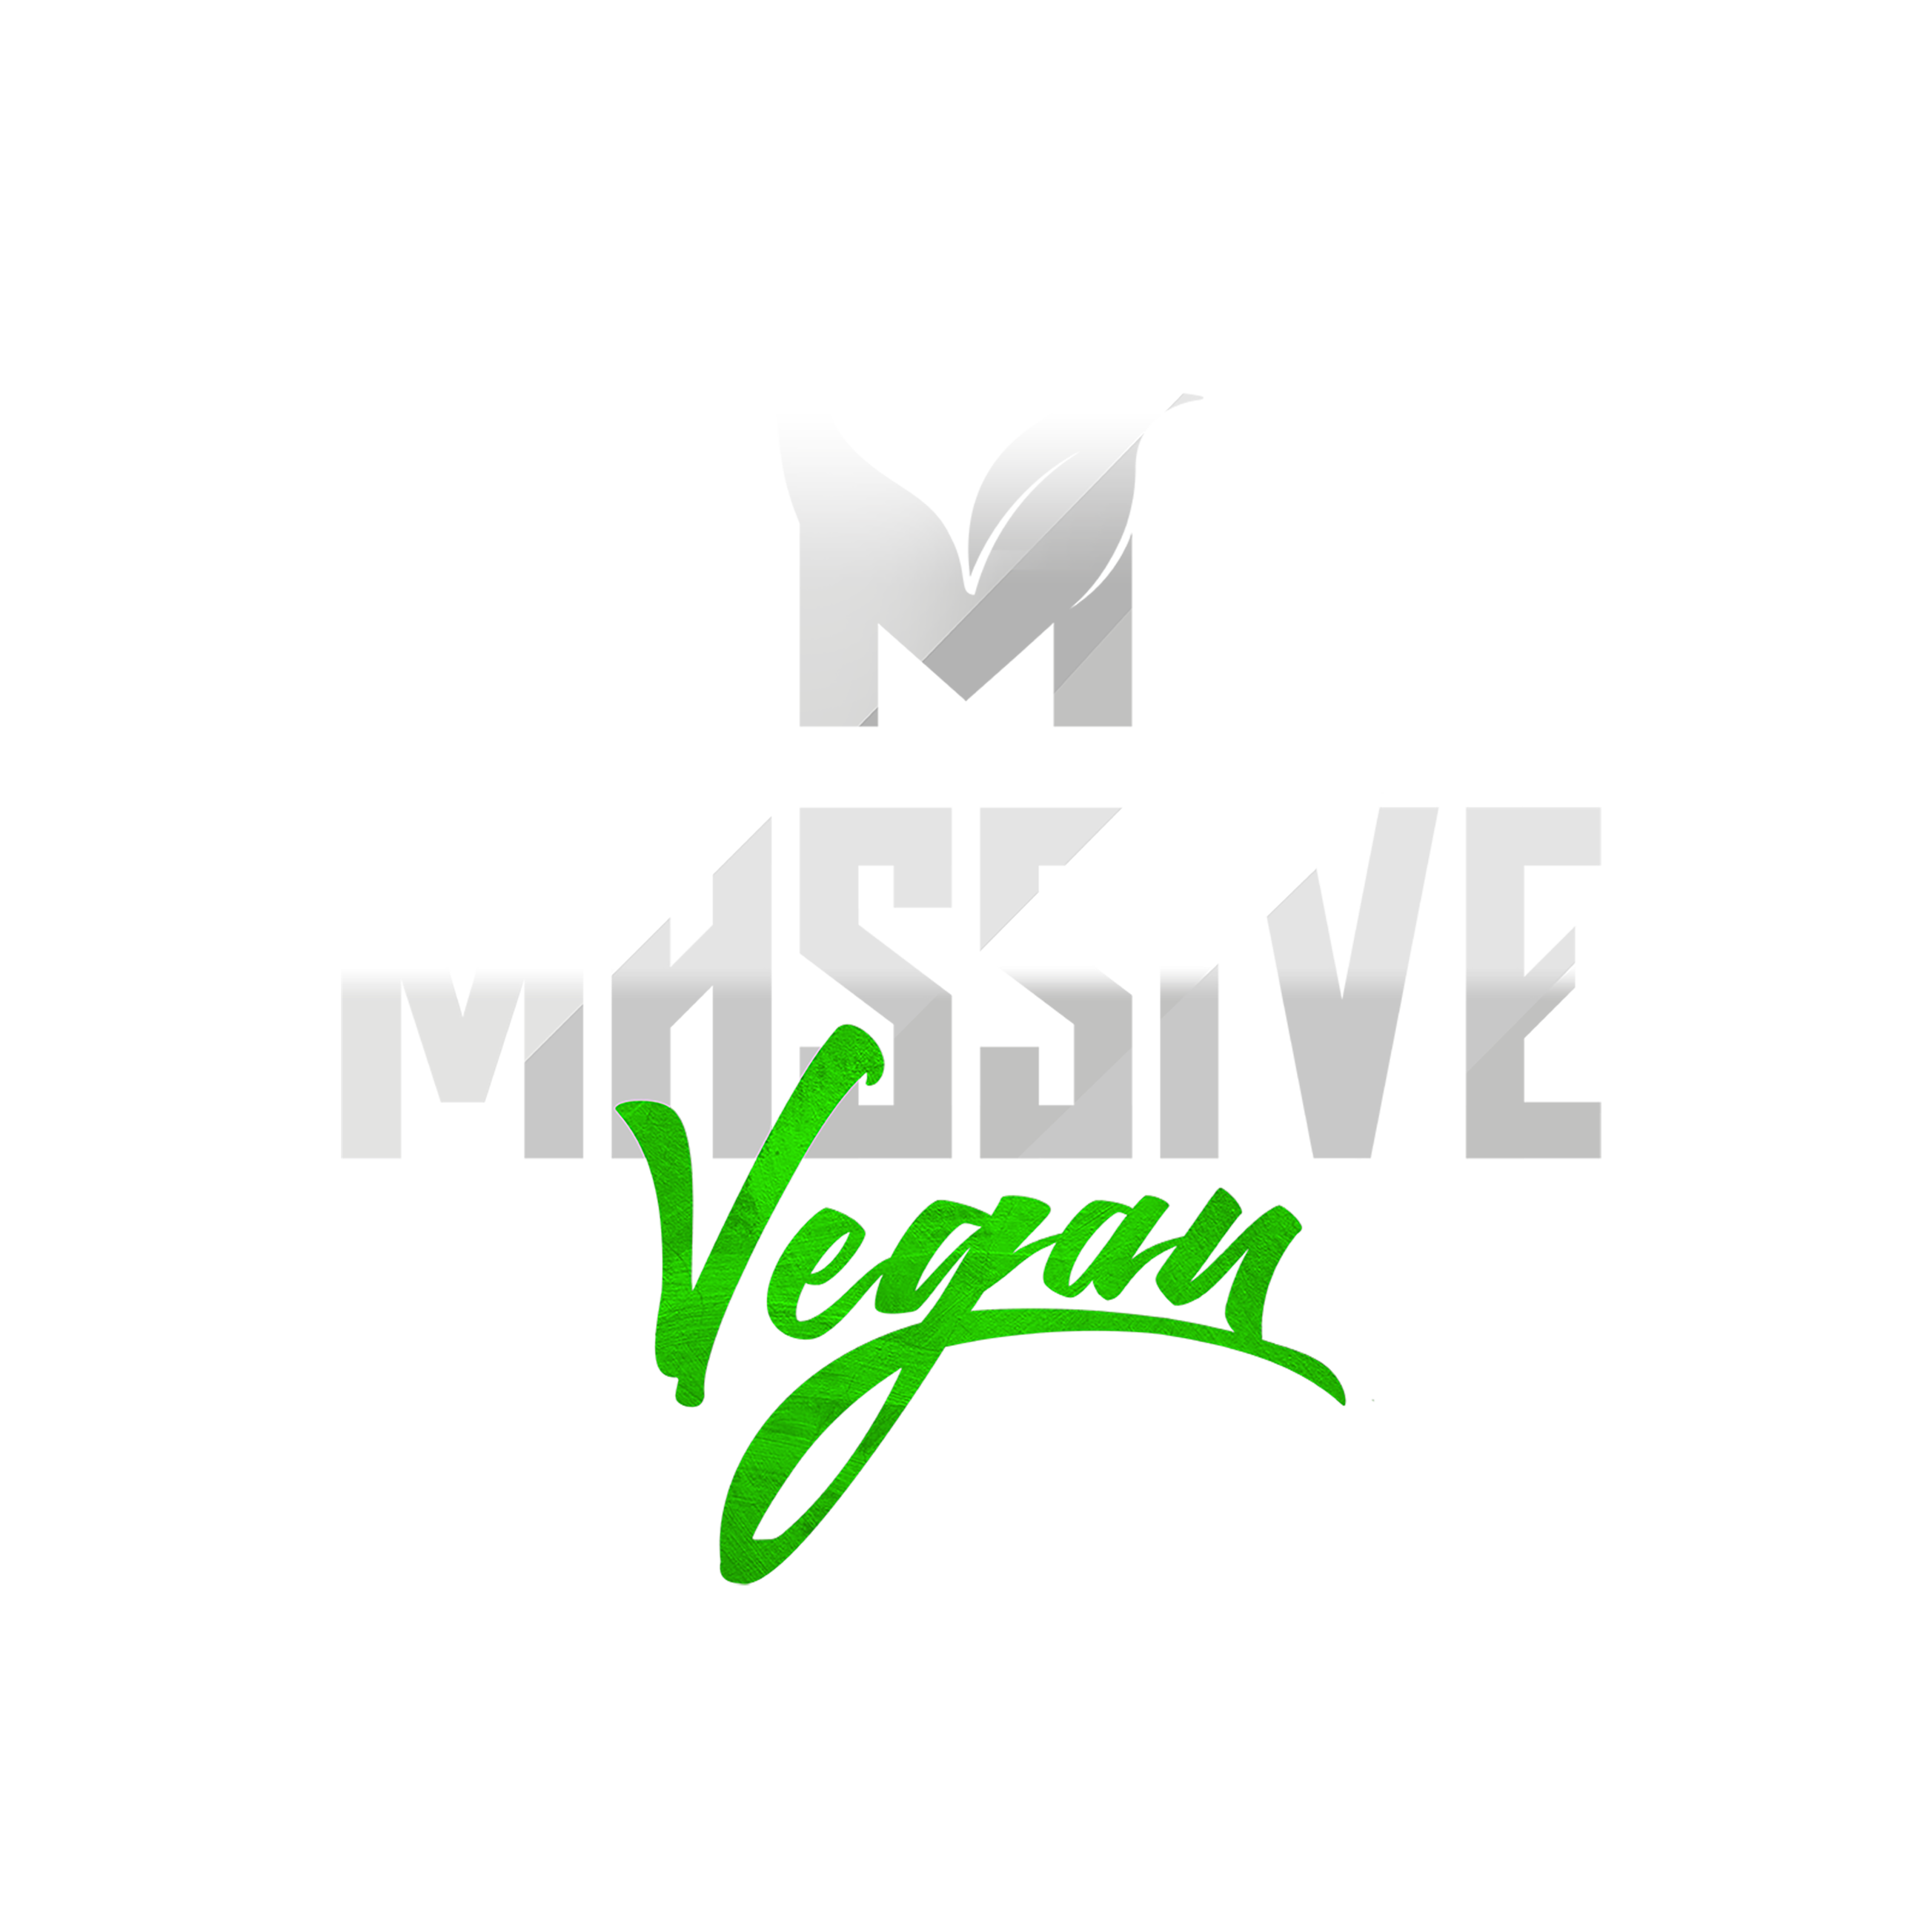 Massive Vegan